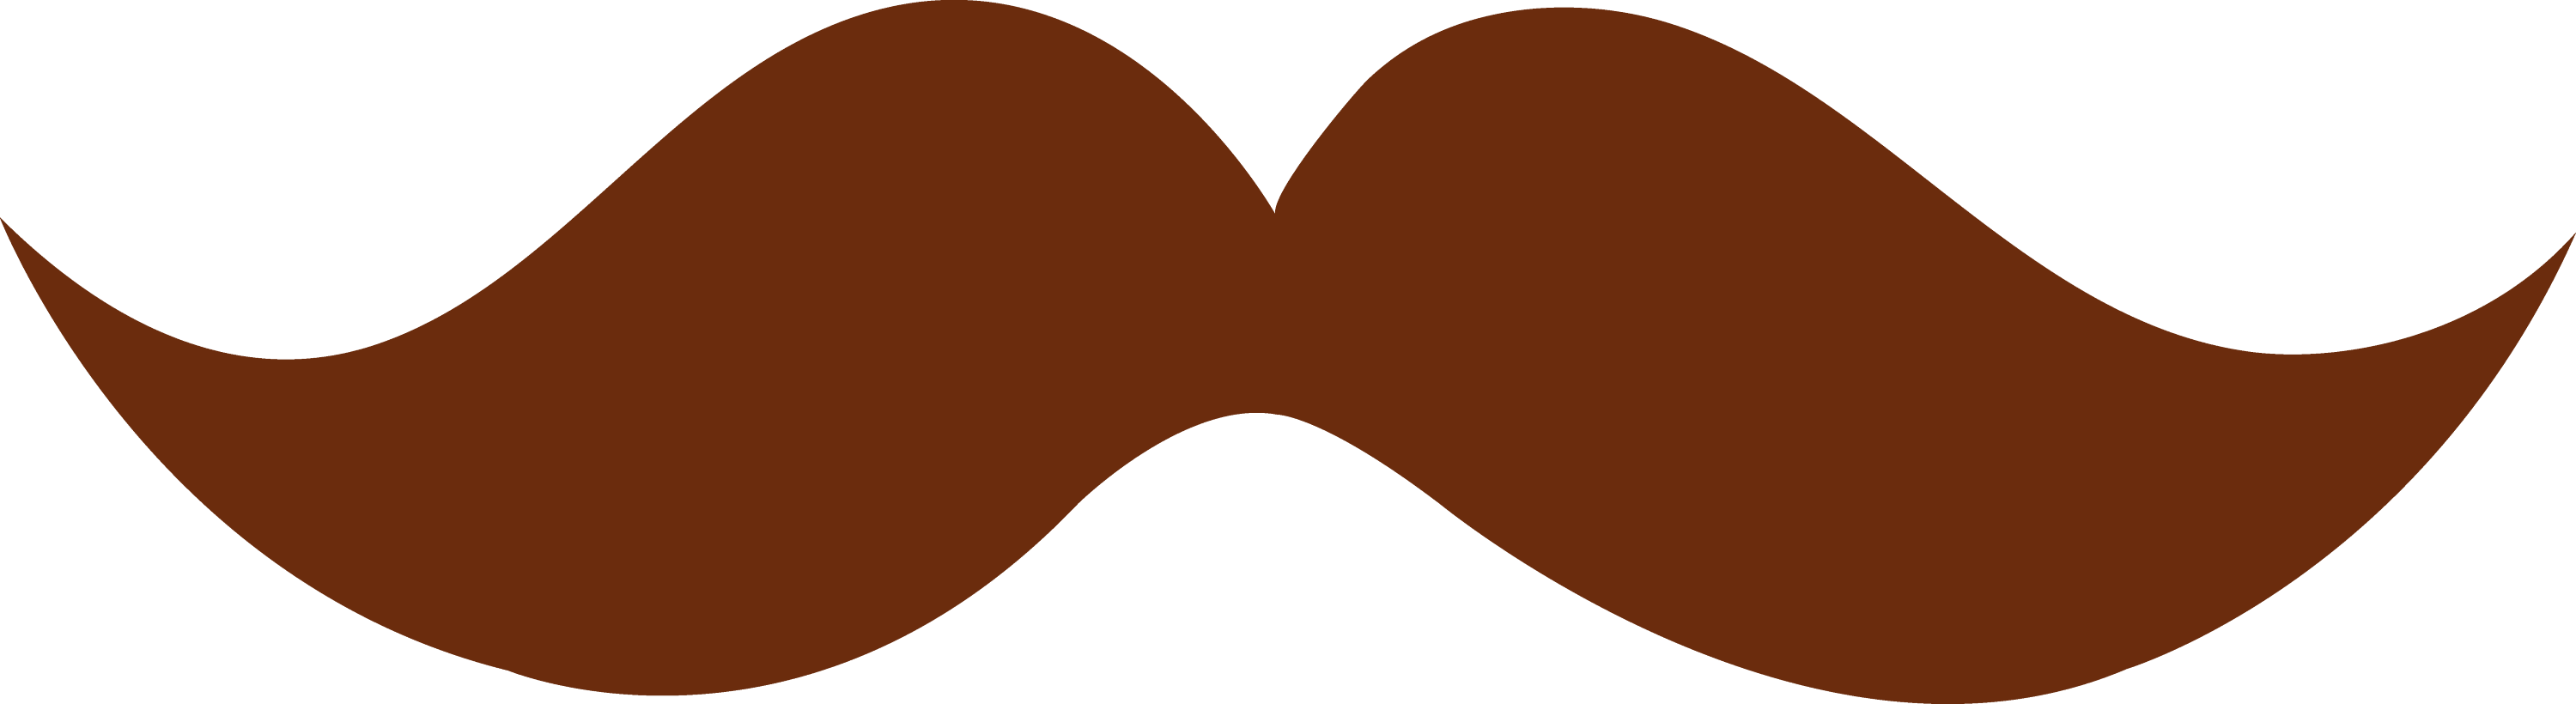 Brown Moustache Design - Free Clip Art